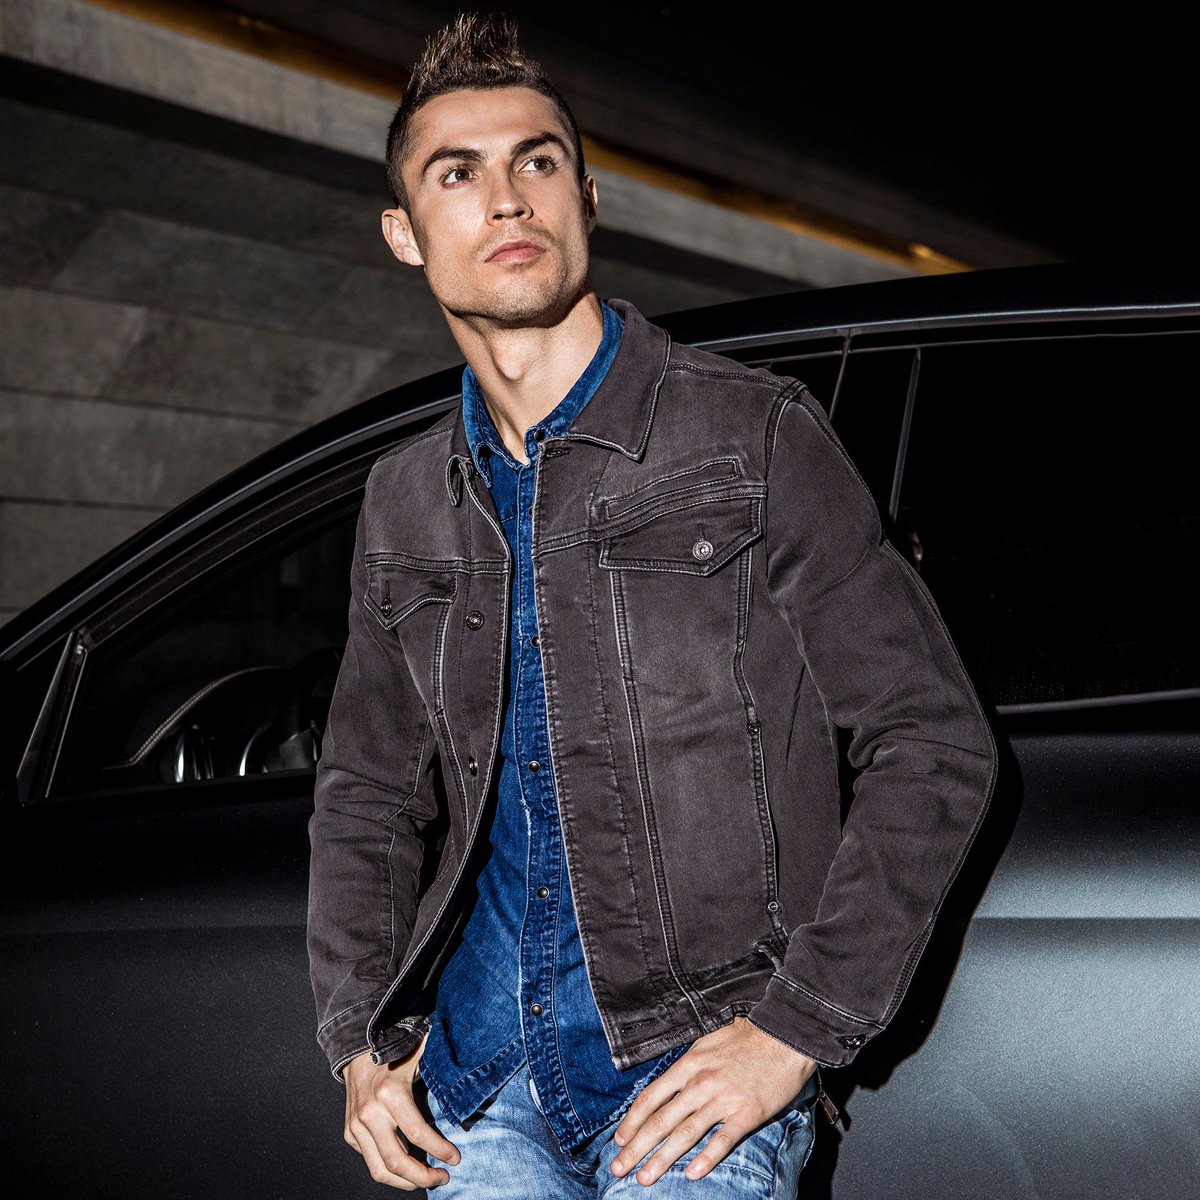 Cristiano Ronaldo on Twitter: "Denim on denim 👖 living in my CR7 jeans 👌  Get yours now on https://t.co/rIL6OwV0rK @cr7limitless #CR7Denim #CR7Jeans  https://t.co/pc6ippbitm" / Twitter